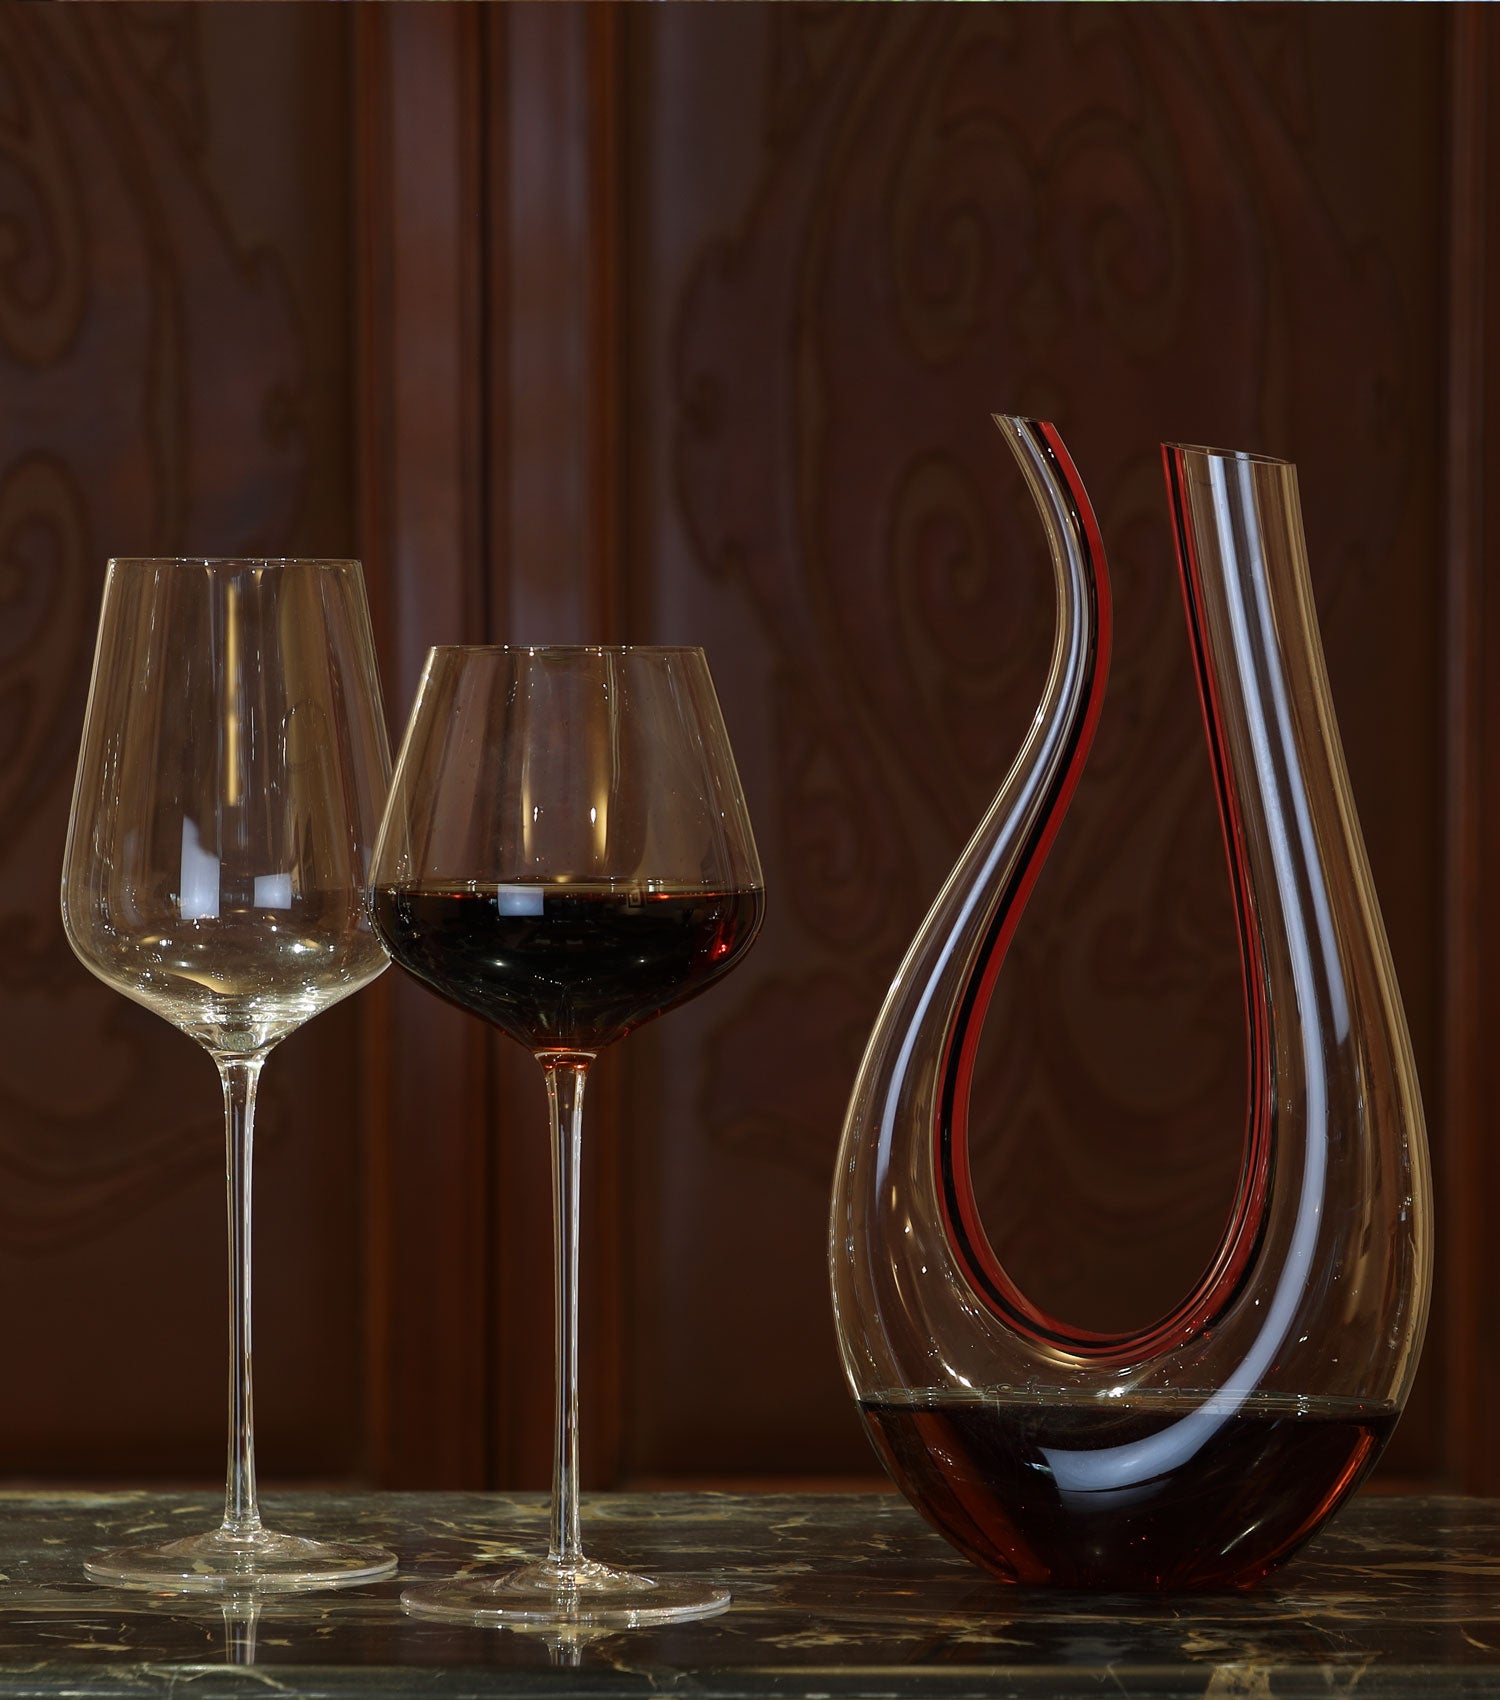 Empire White wine glass set of 6